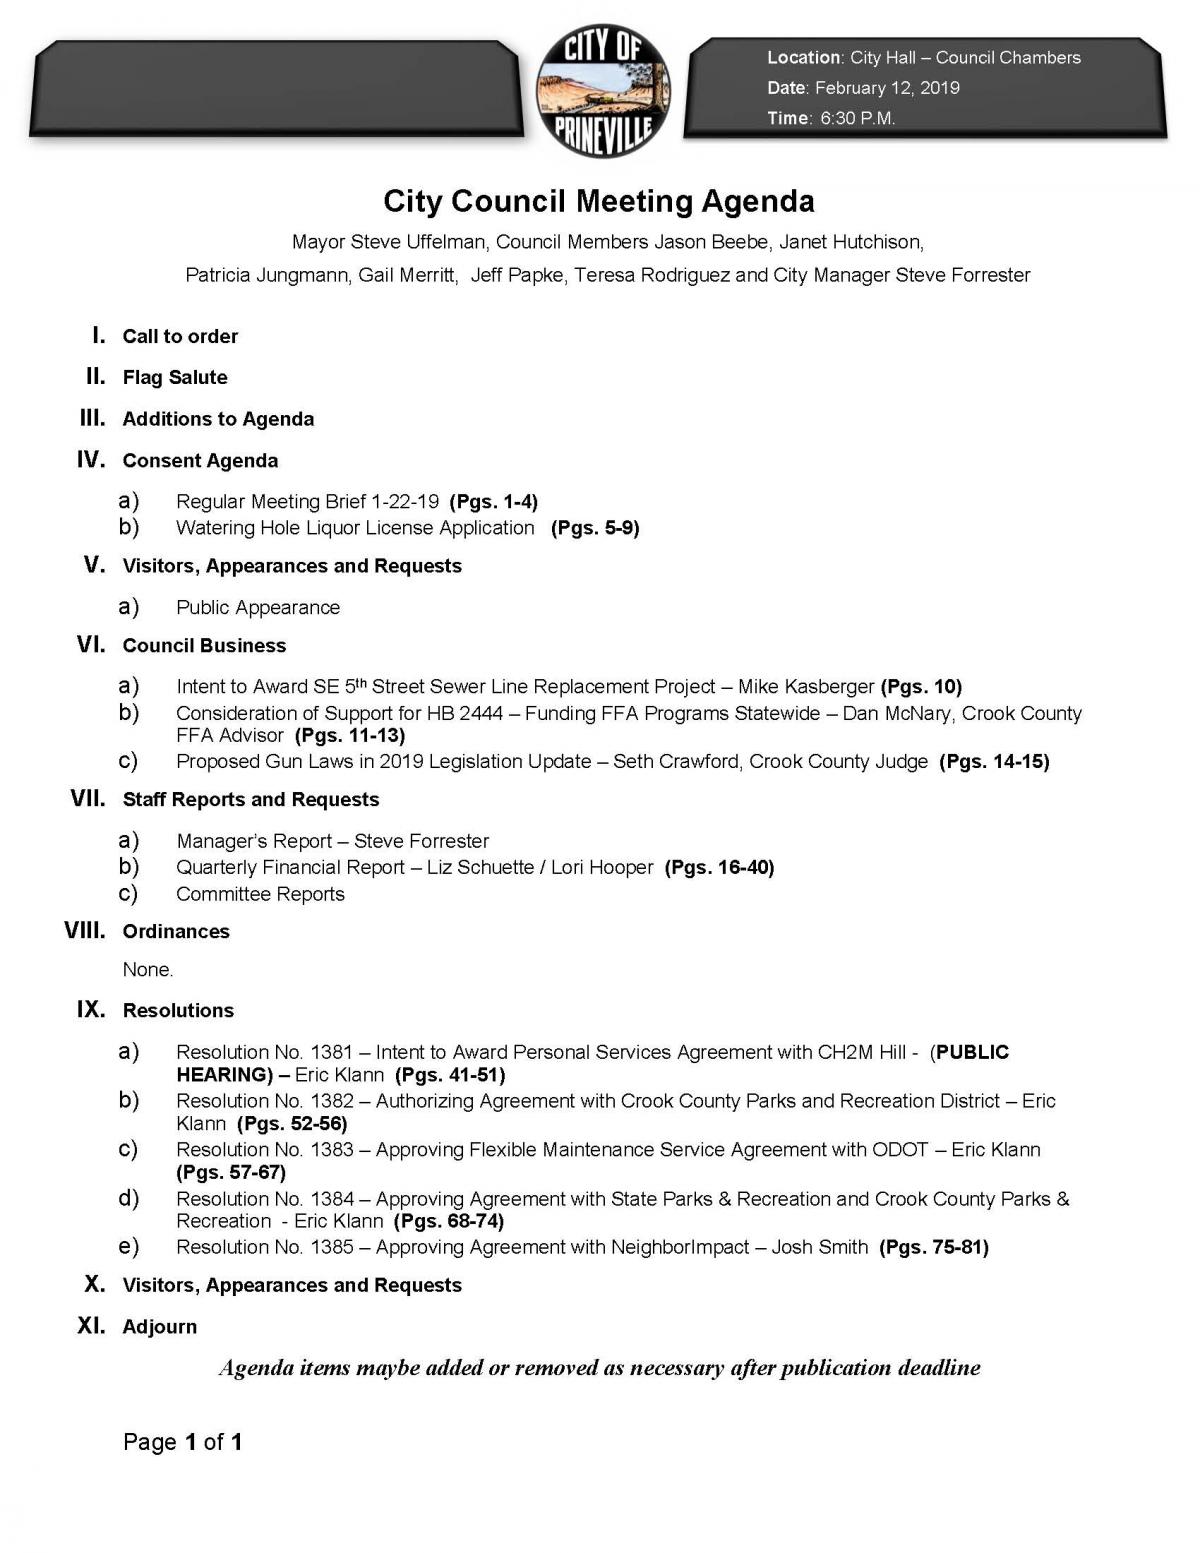 Meeting Agenda 2-12-19